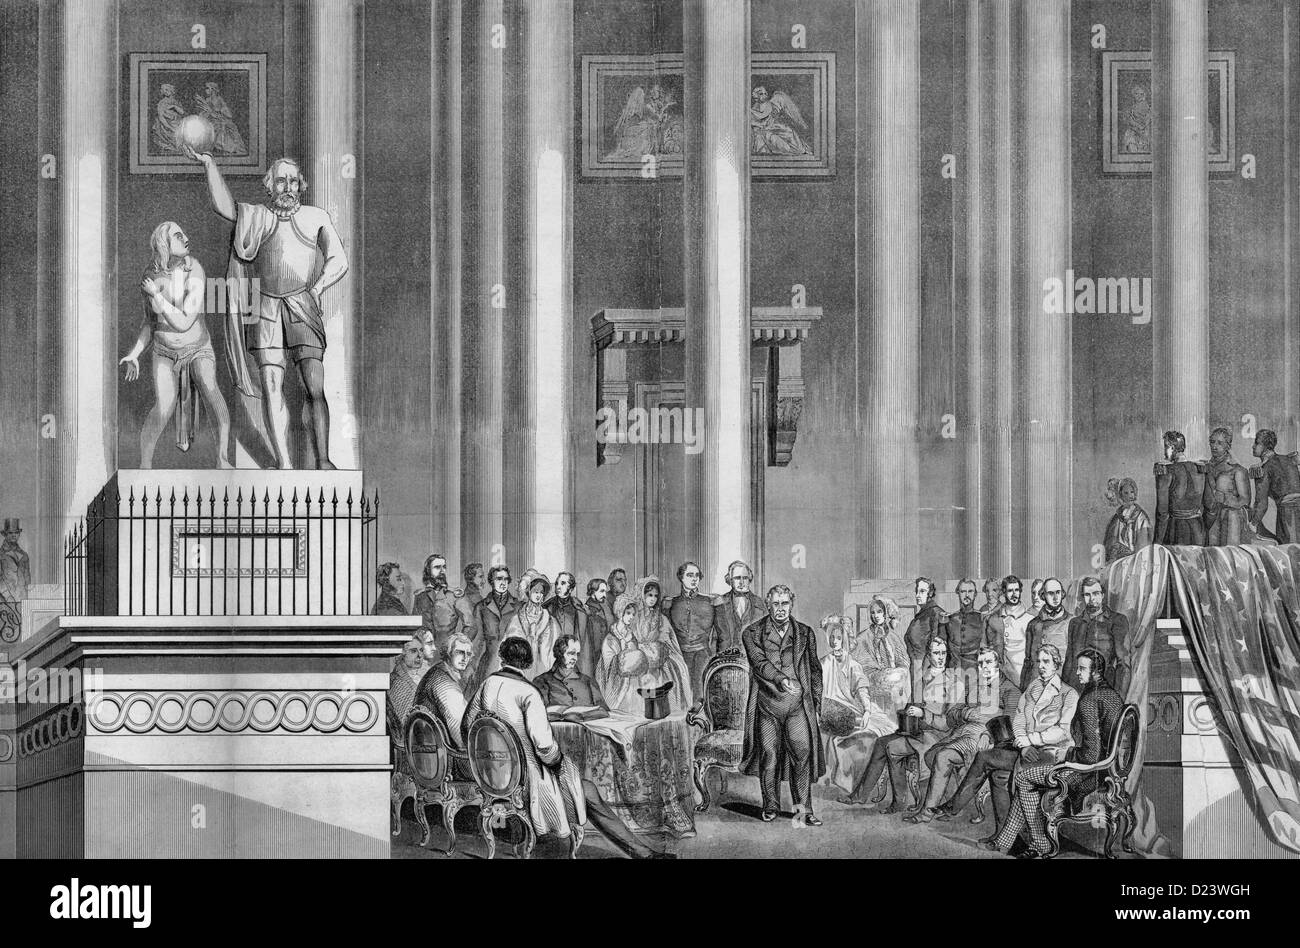 L'inauguration de Zachary Taylor - 1849 Banque D'Images